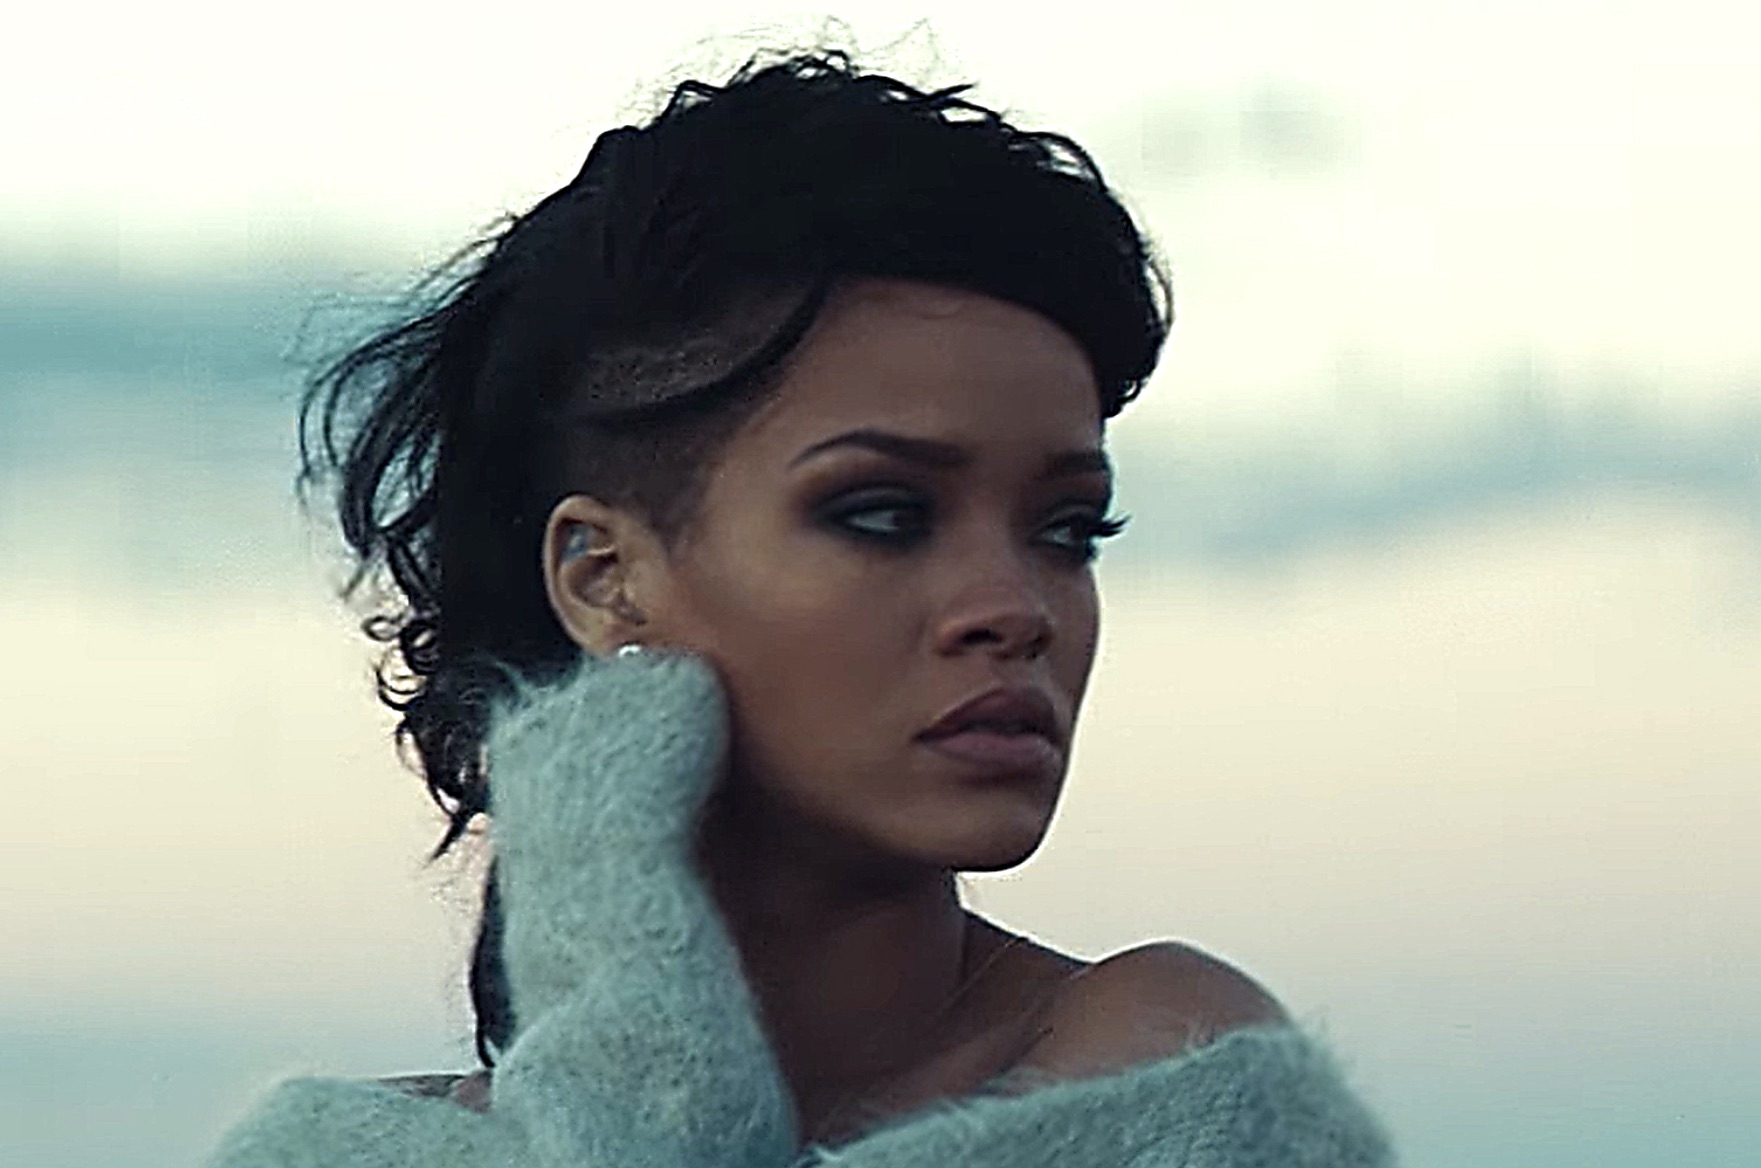 Rihanna’s ‘Diamonds’ Certified Diamond by the RIAA